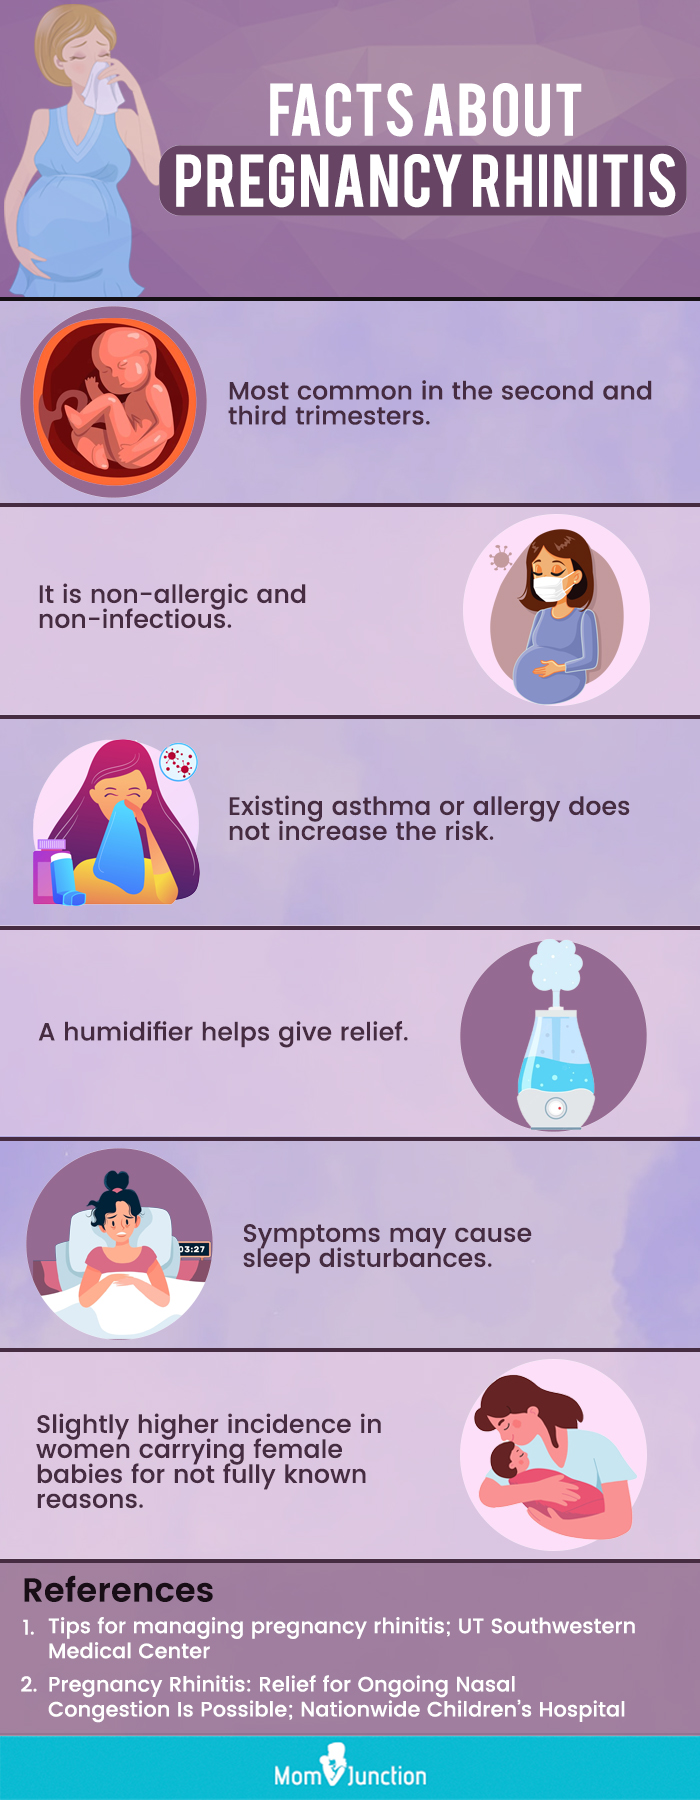 Breast Fibroadenomas: Symptoms, Diagnosis, Treatment